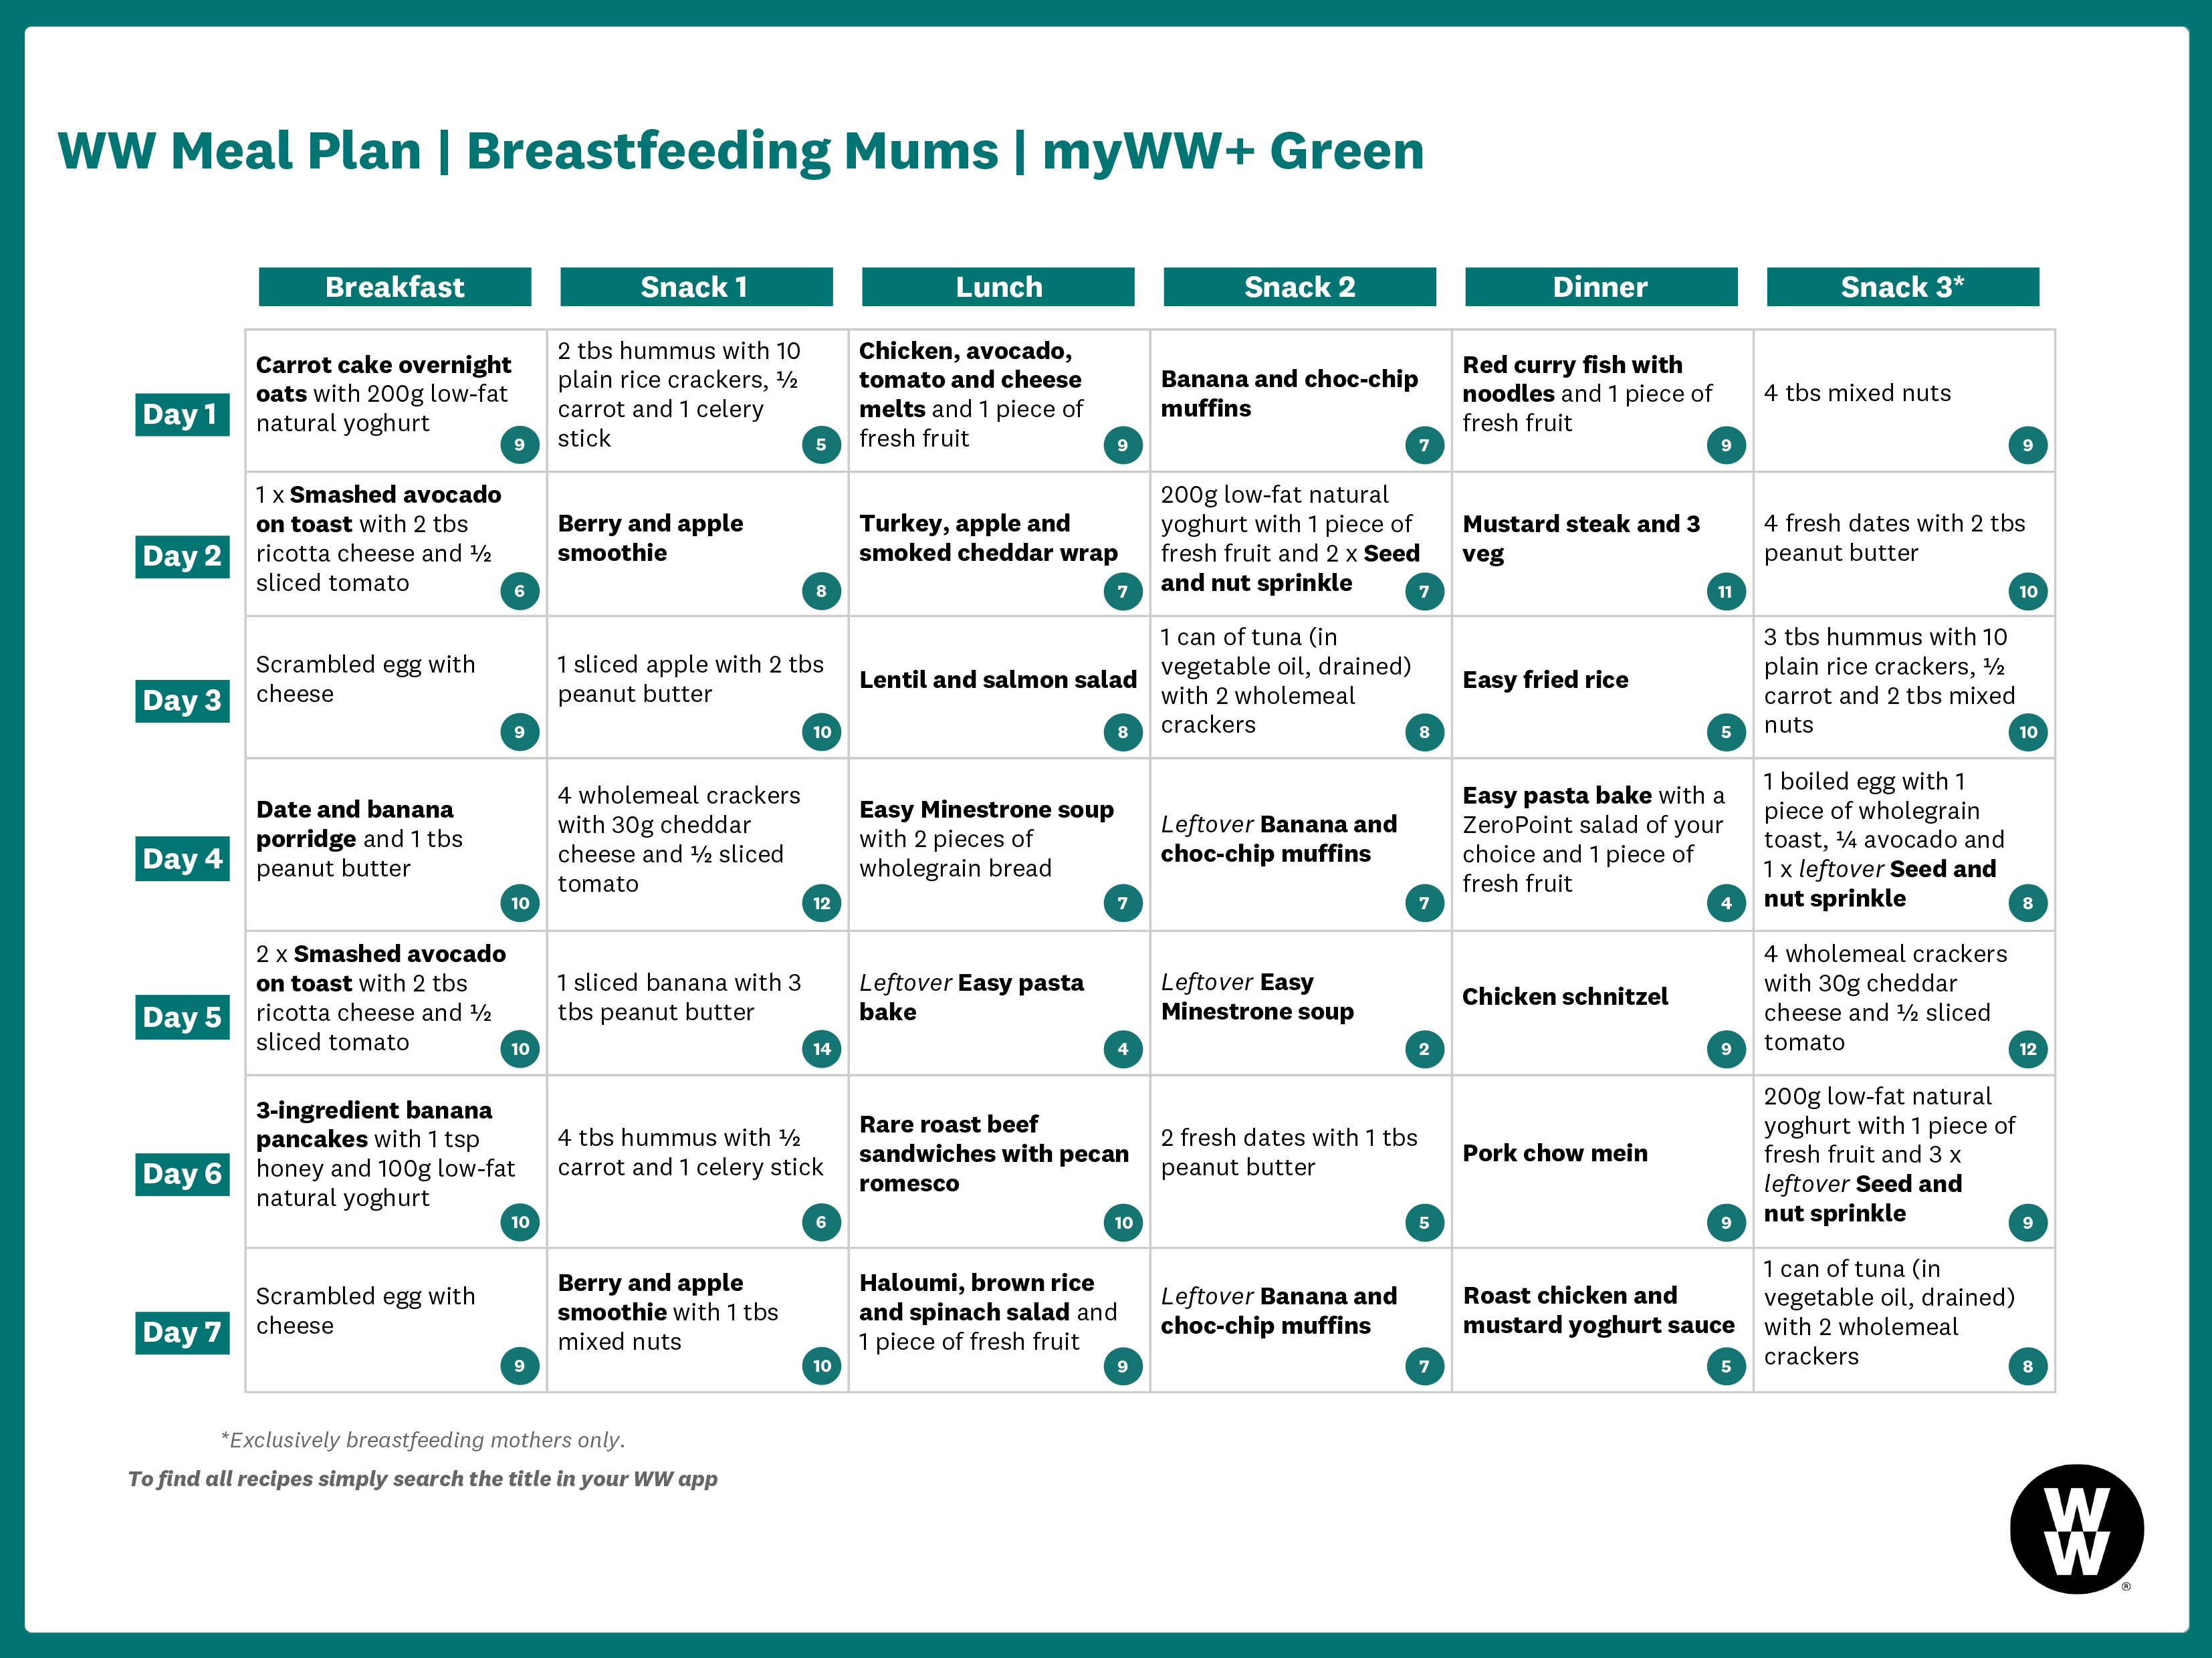 Green Meal Plan - Breastfeeding Mums